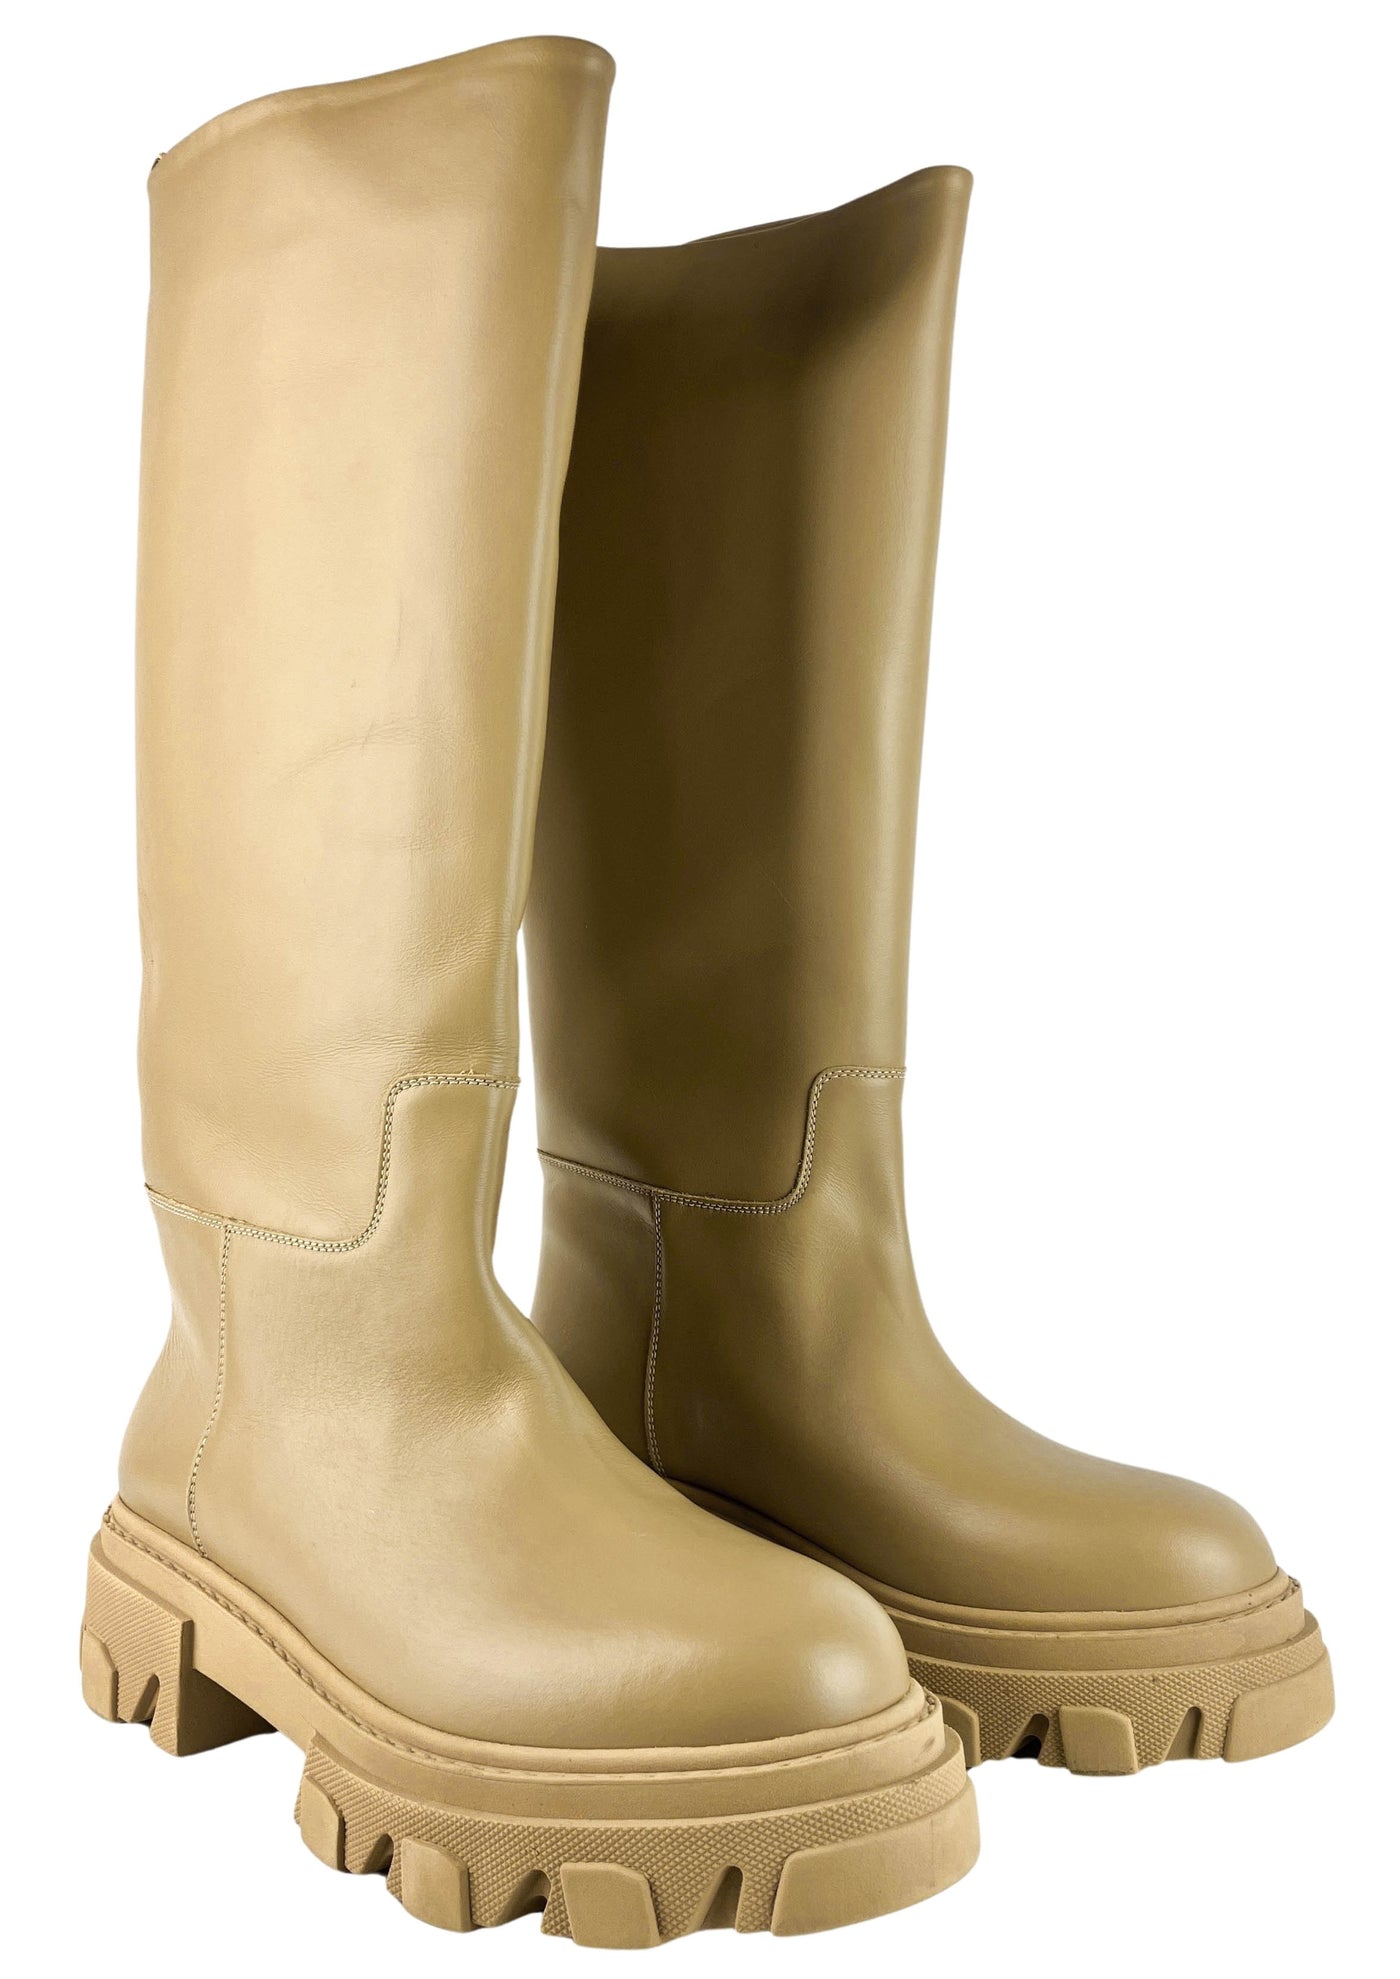 GIA X PERNILLE TEISBAEK Perni 07 Boots in Camel Beige - Discounts on Gia x Pernille Teisbaek at UAL